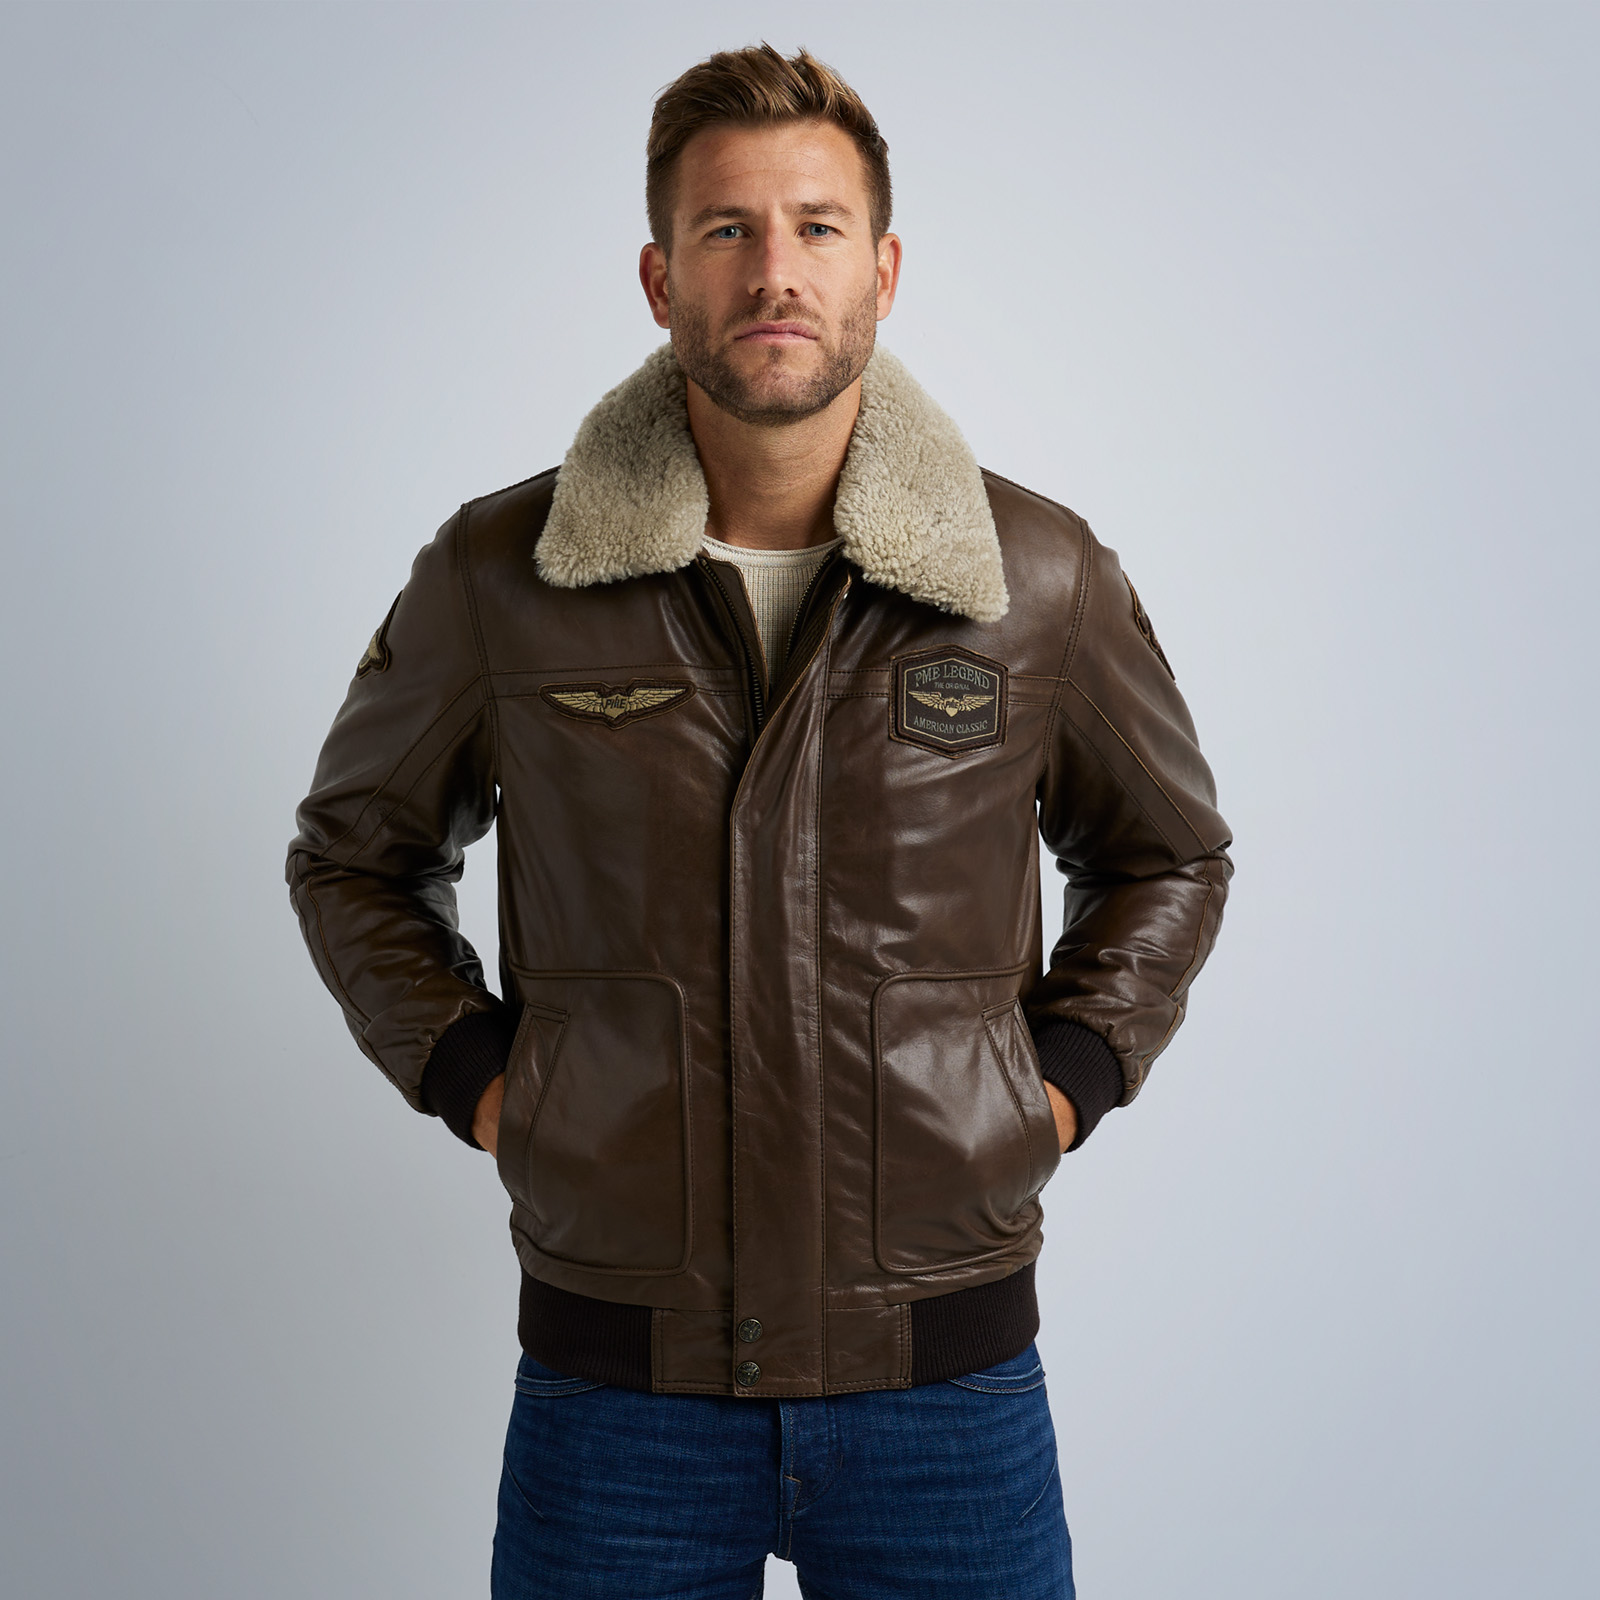 Toerist Il Lam PME LEGEND | Hudson leather jacket | Free shipping and returns